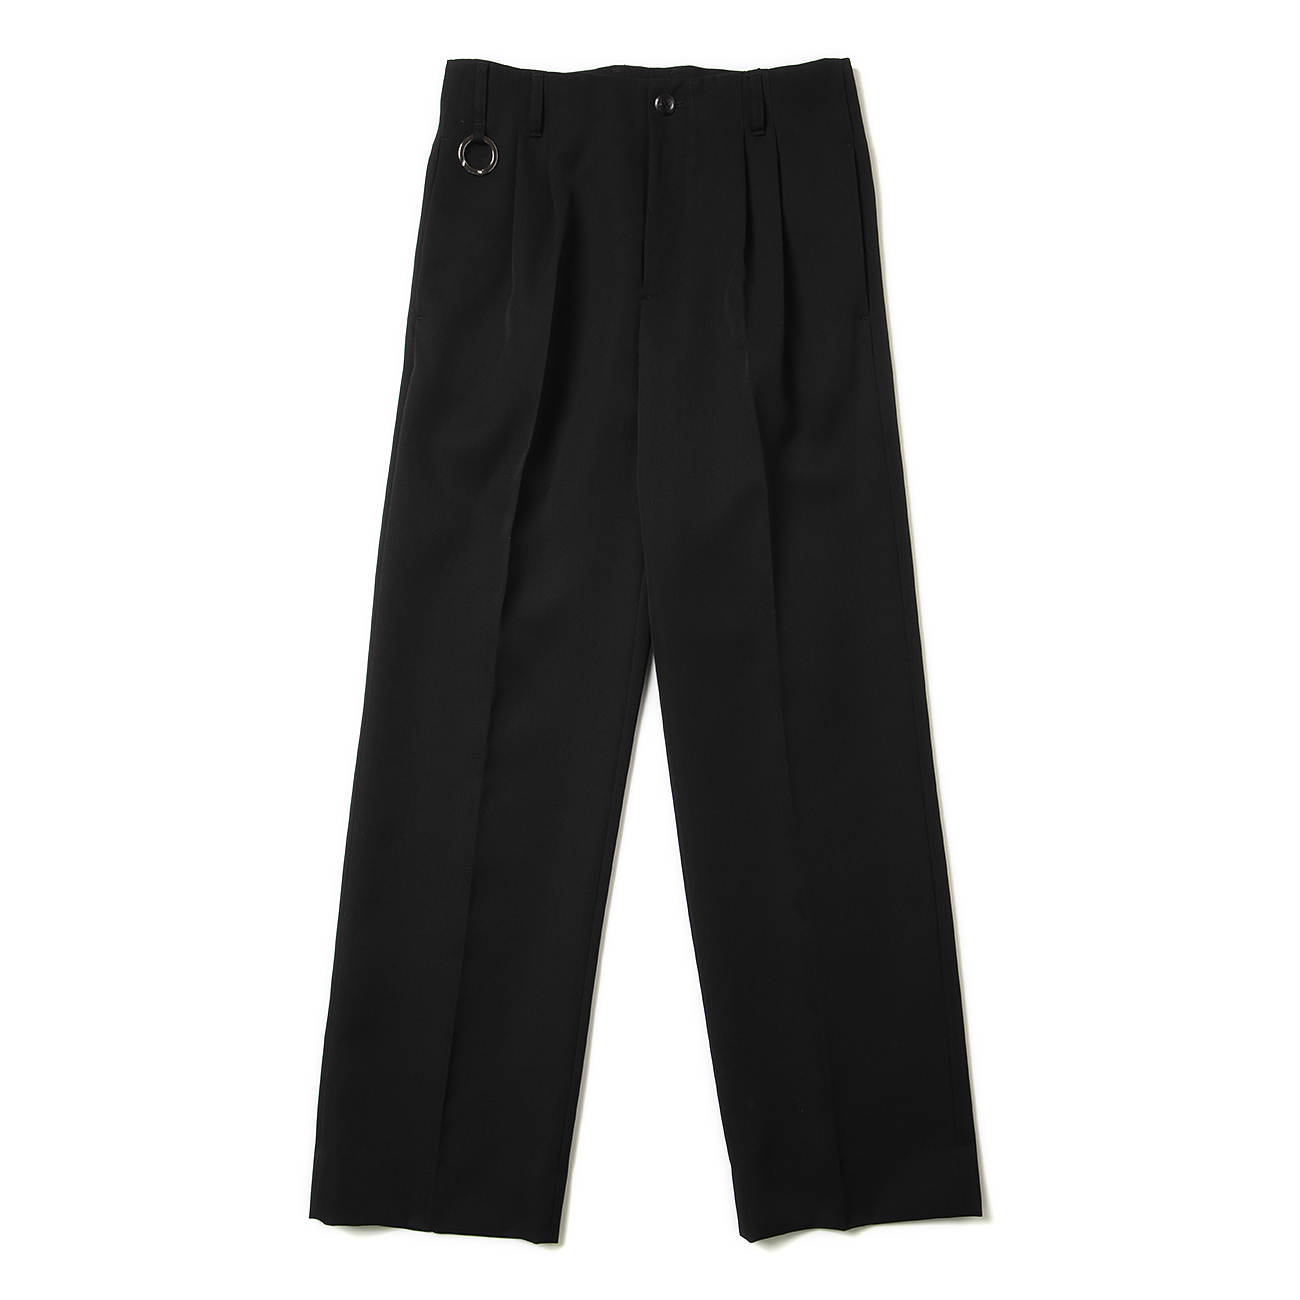 QUINN / Wide Tailored Pants Wool - Black